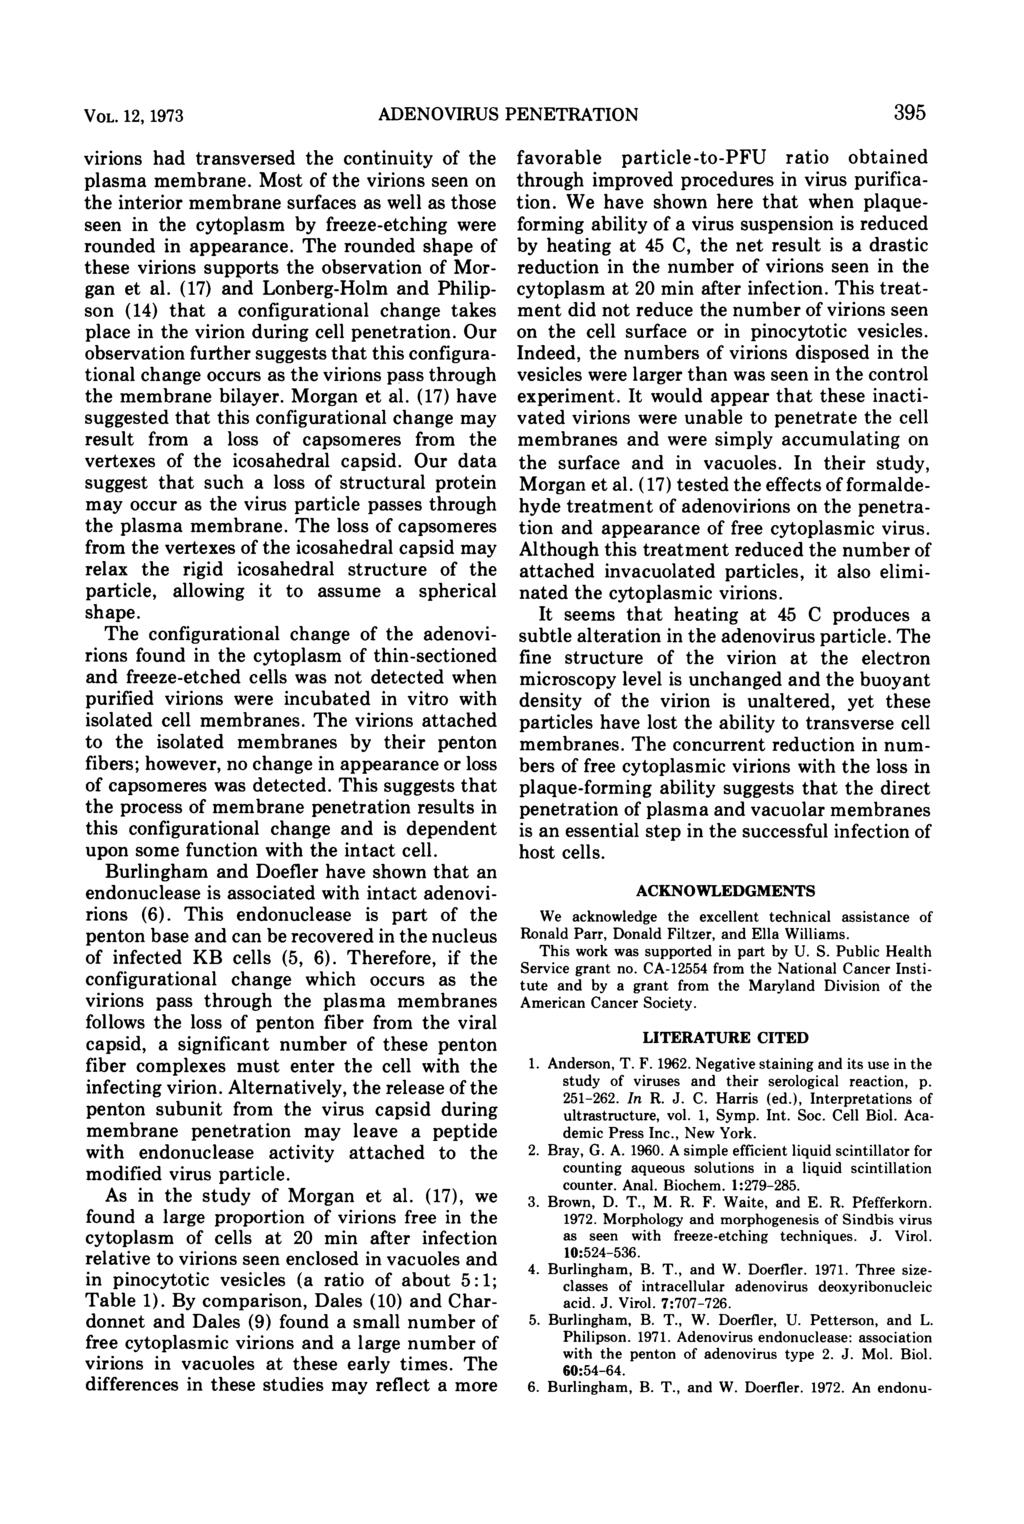 VOL. 12, 1973 ADENOVIRUS PENETRATION virions had transversed the continuity of the plasma membrane.